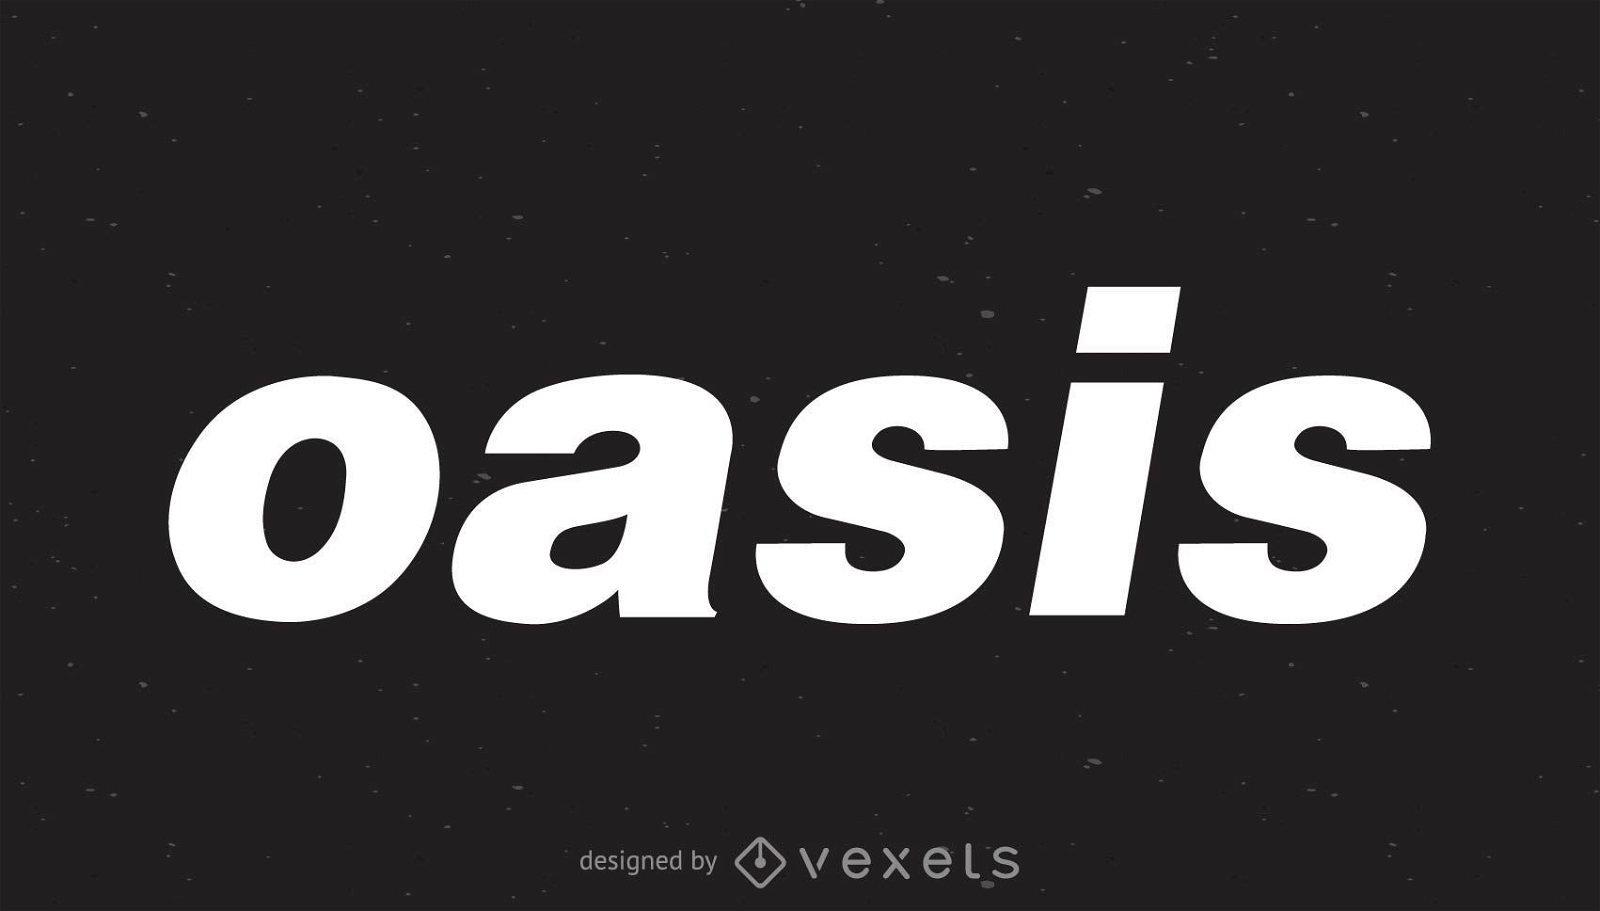 Logotipo de la banda Oasis